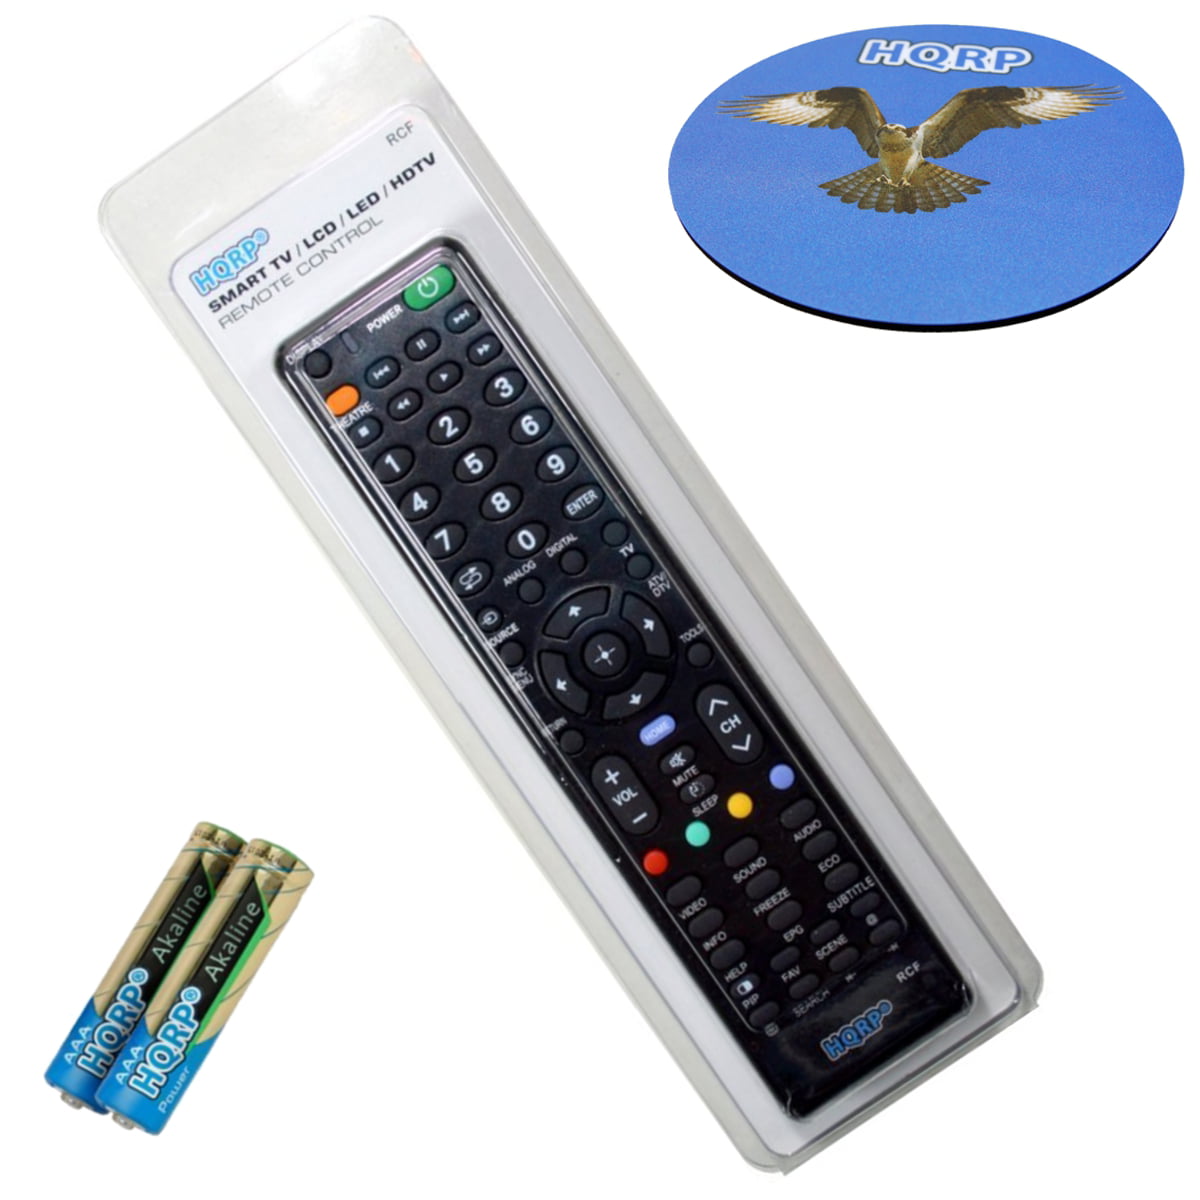 Remote Control for Sony TV KDL-40BX450 KDL-40BX450 Remote Fast Ship 